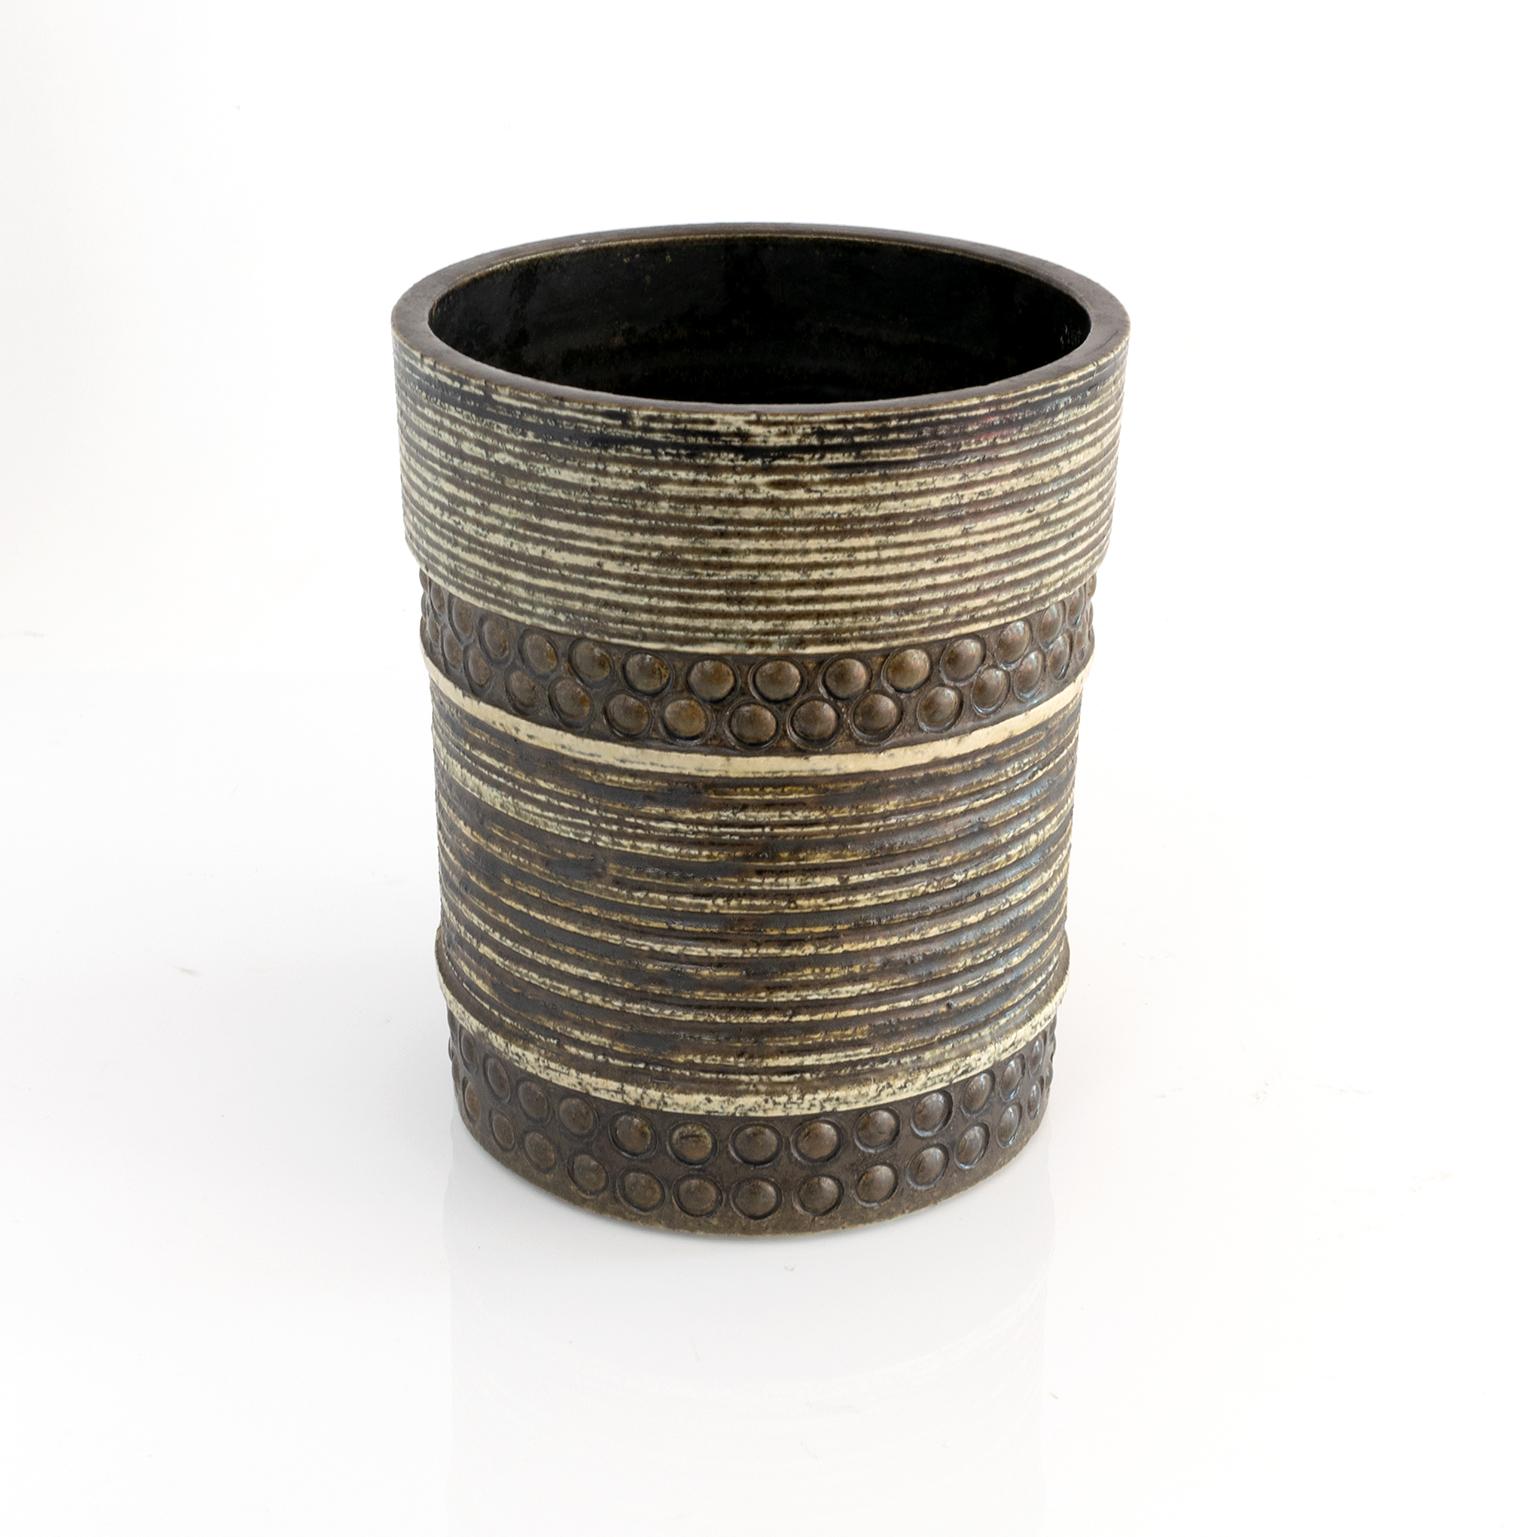 Scandinavian Modern Large Cylinder Shaped Vase by Britt-Louise Sundell for Gustavsberg, Sweden